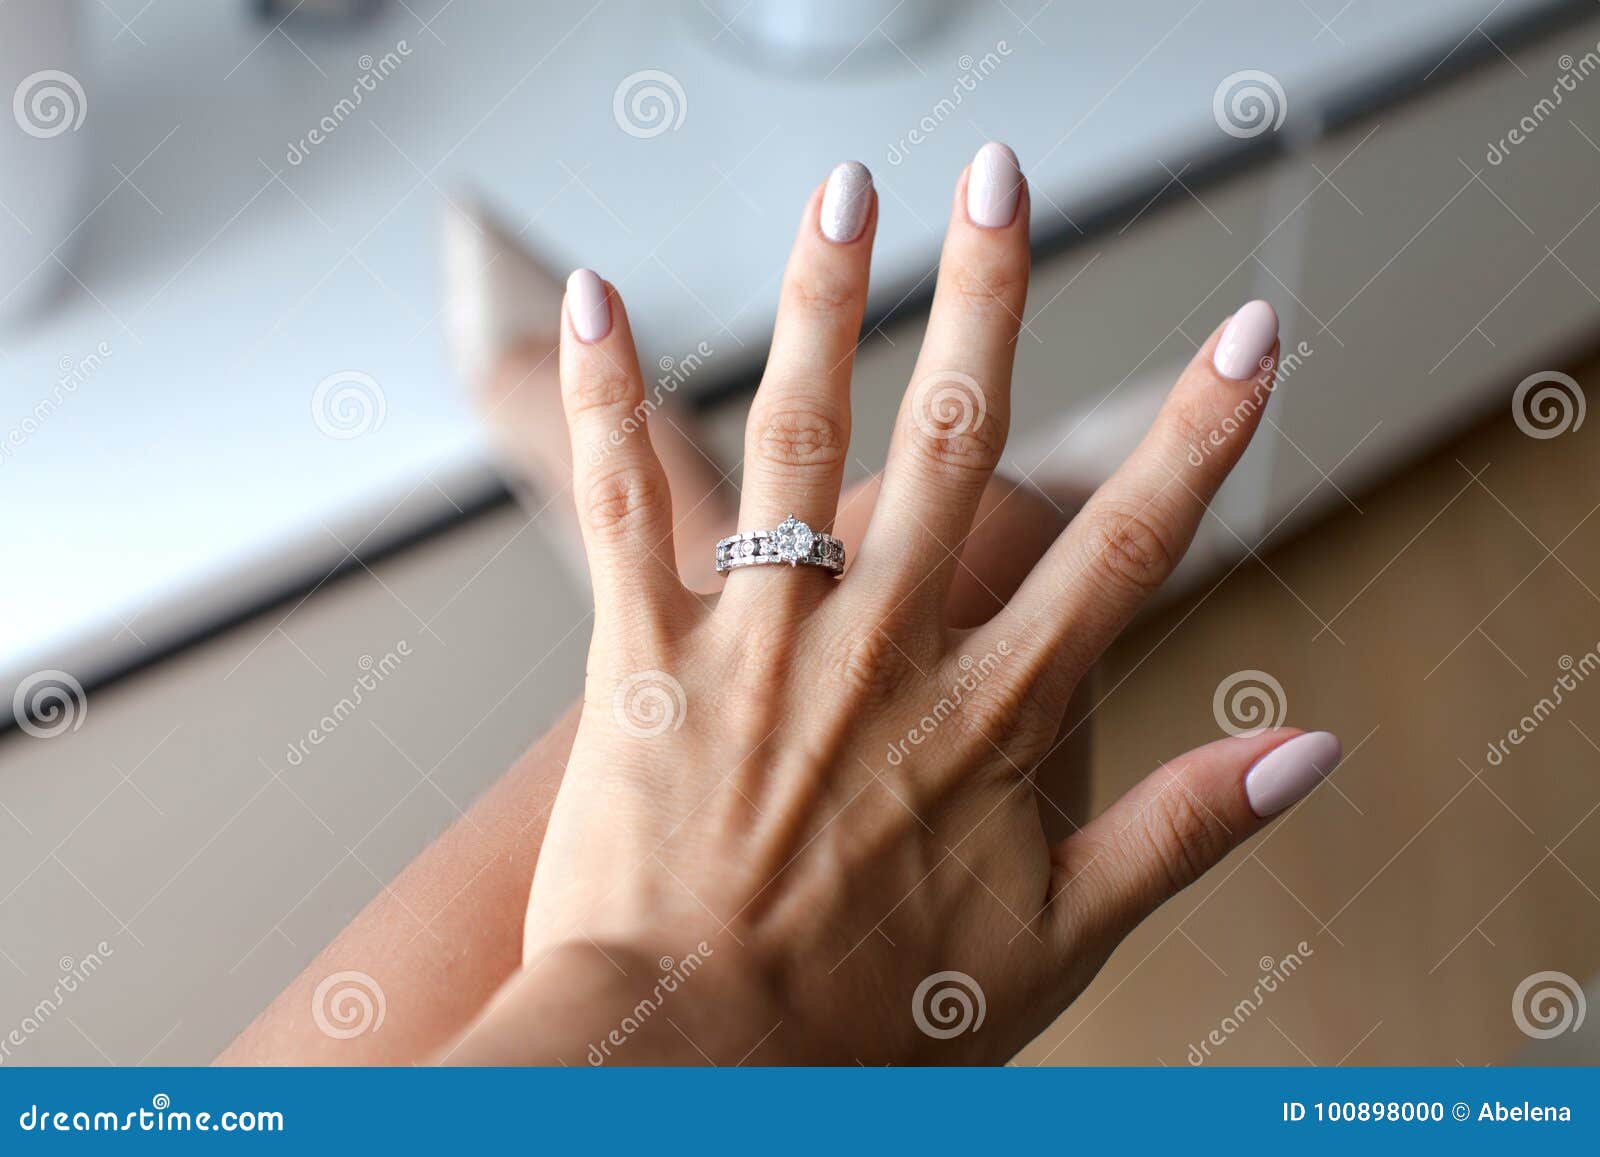 Beautiful Rings - Beautiful Rings added a new photo.